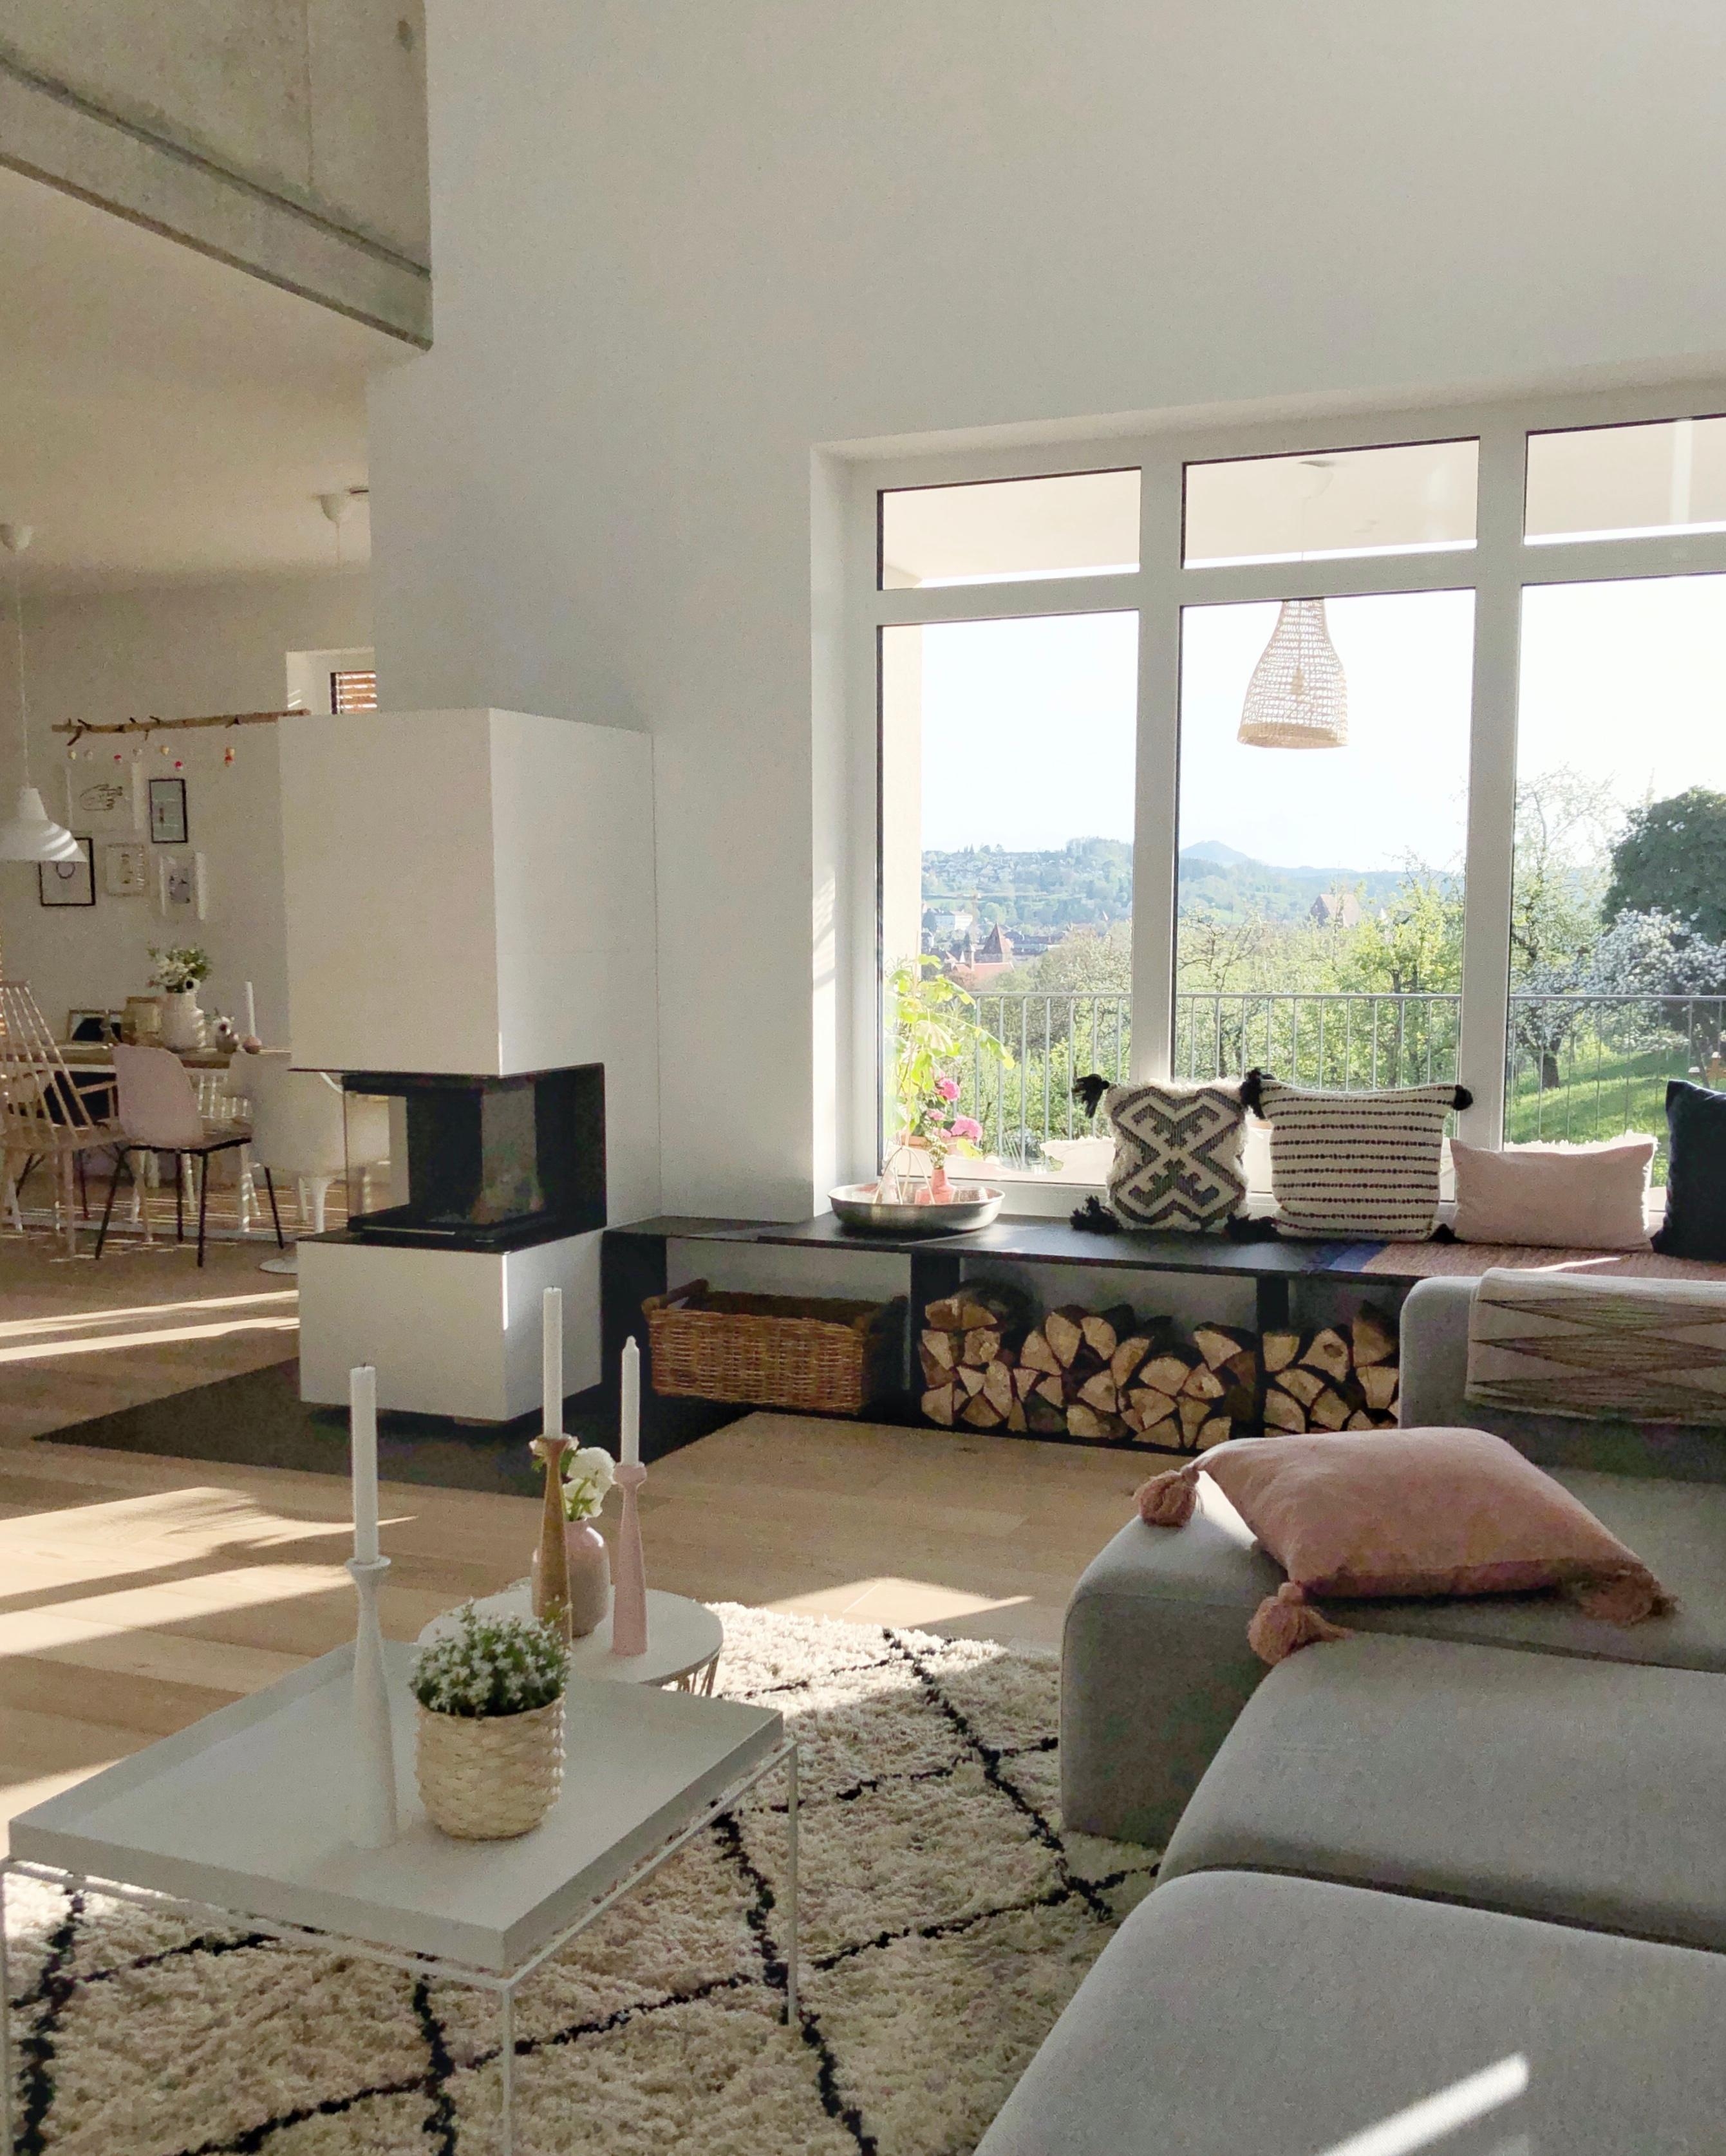 Livingroom!
#livingroom#fensterbank#kaminbank#sitzfenster#nordichome#minimalism